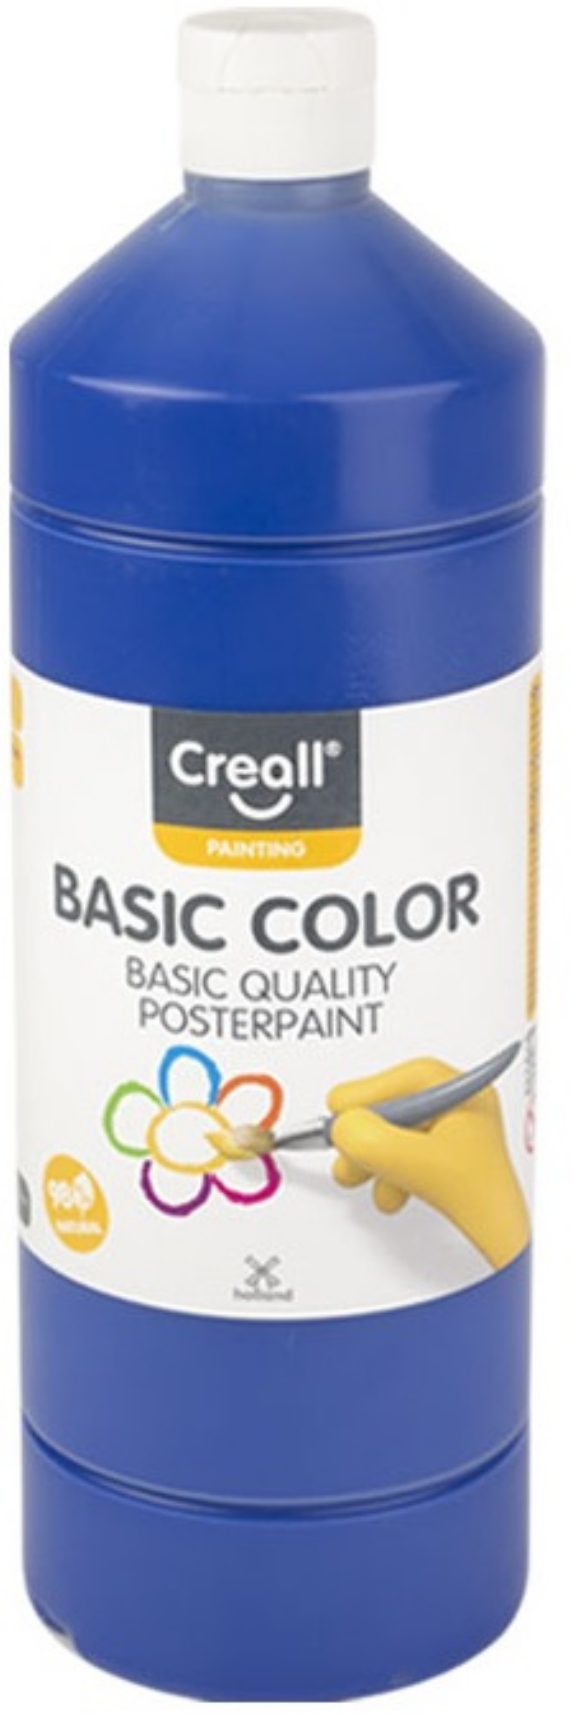 Basic-color plakkaatverf, 1000 ml, 11 donkerblauw